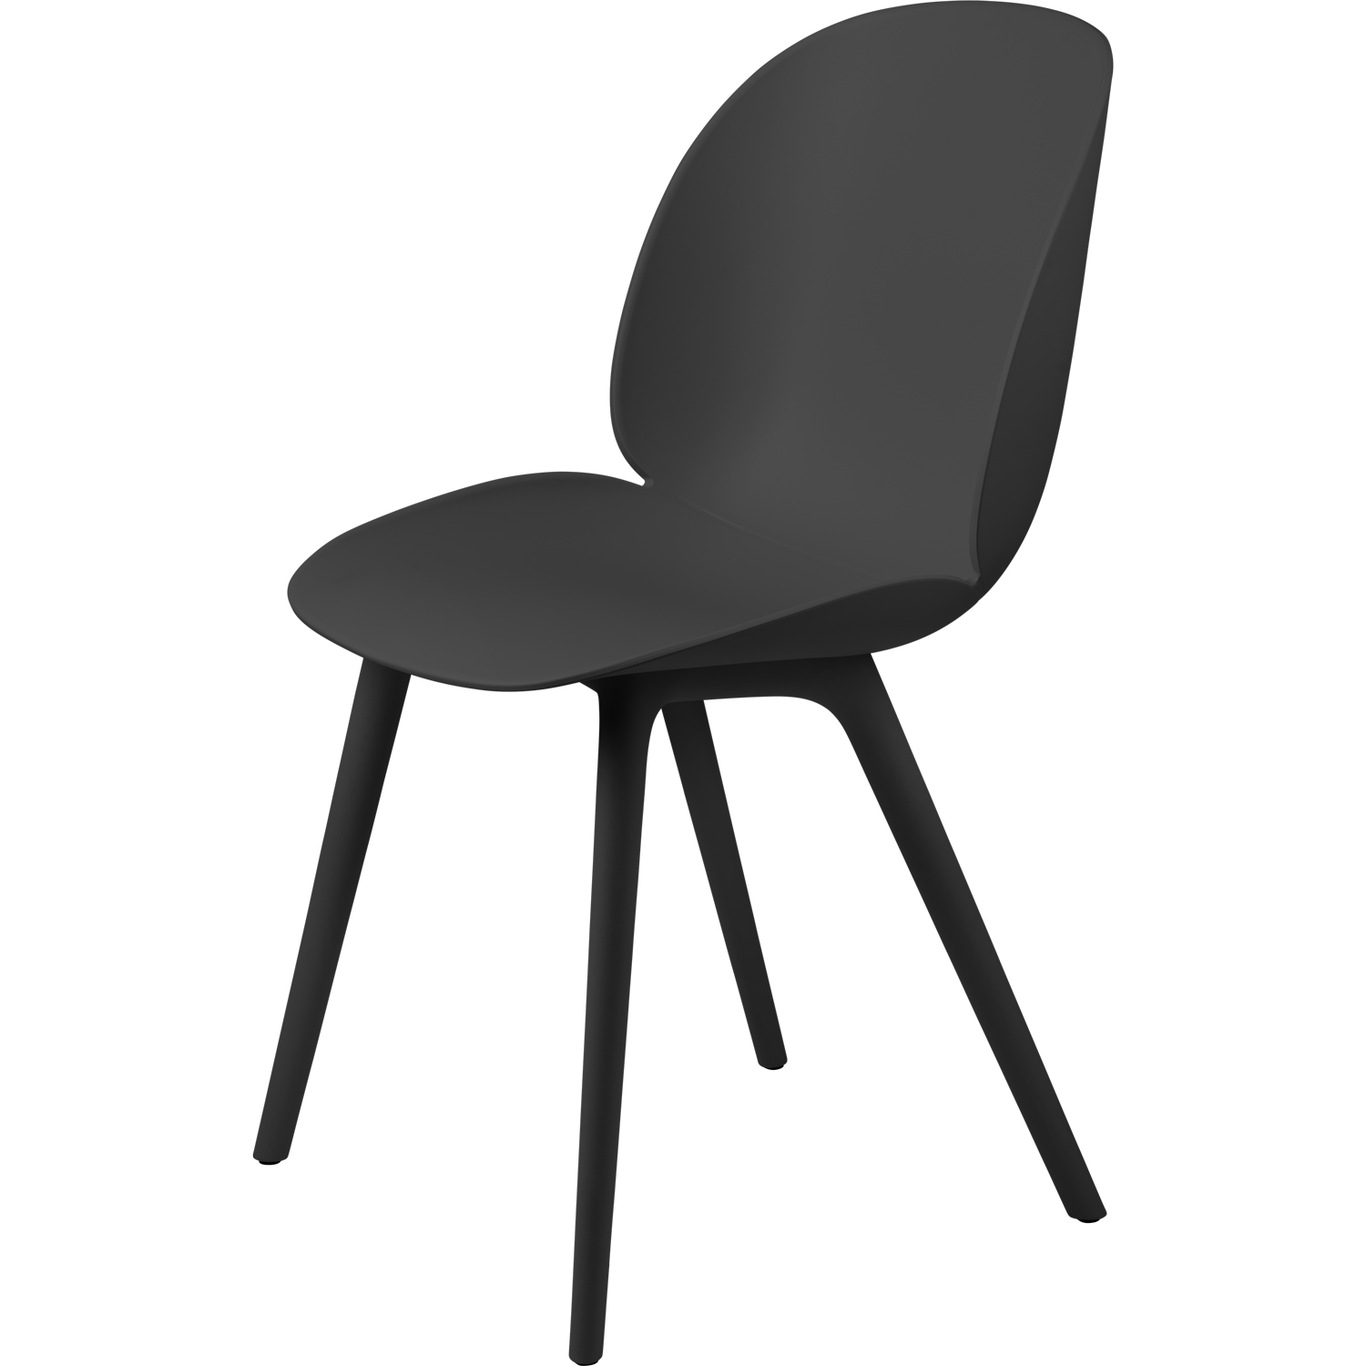 Beetle Chair Un-upholstered Plastic Black Base, Black